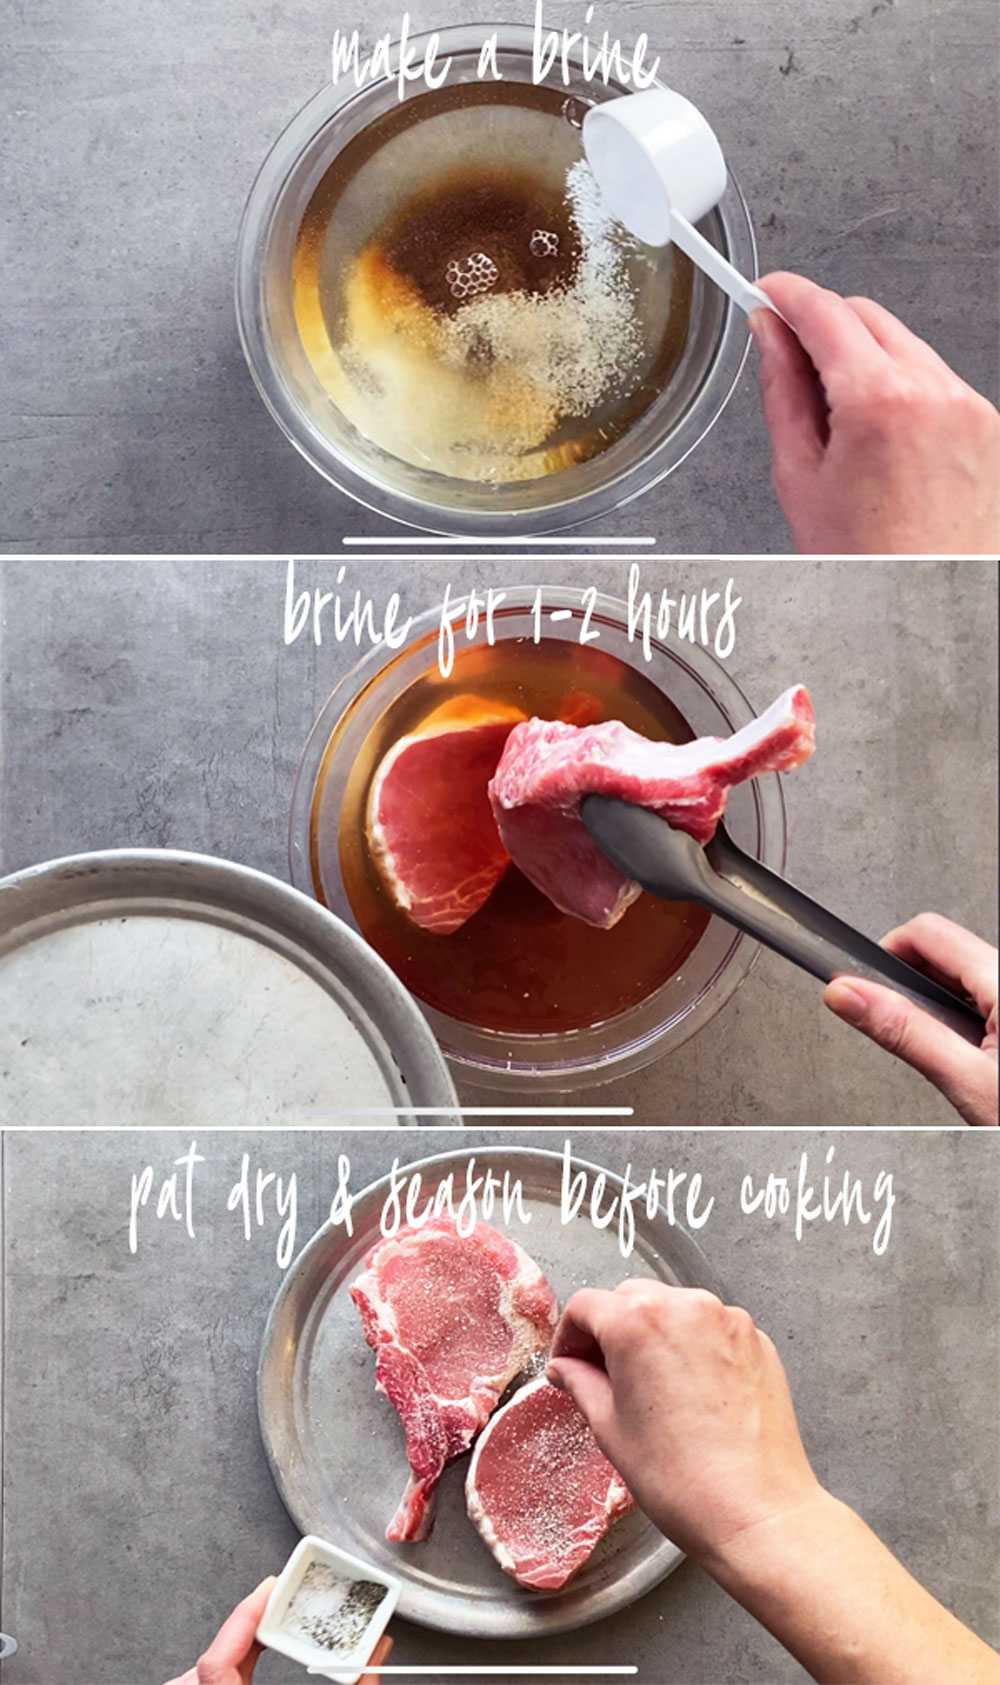 Step by step how to brine thick pork chops